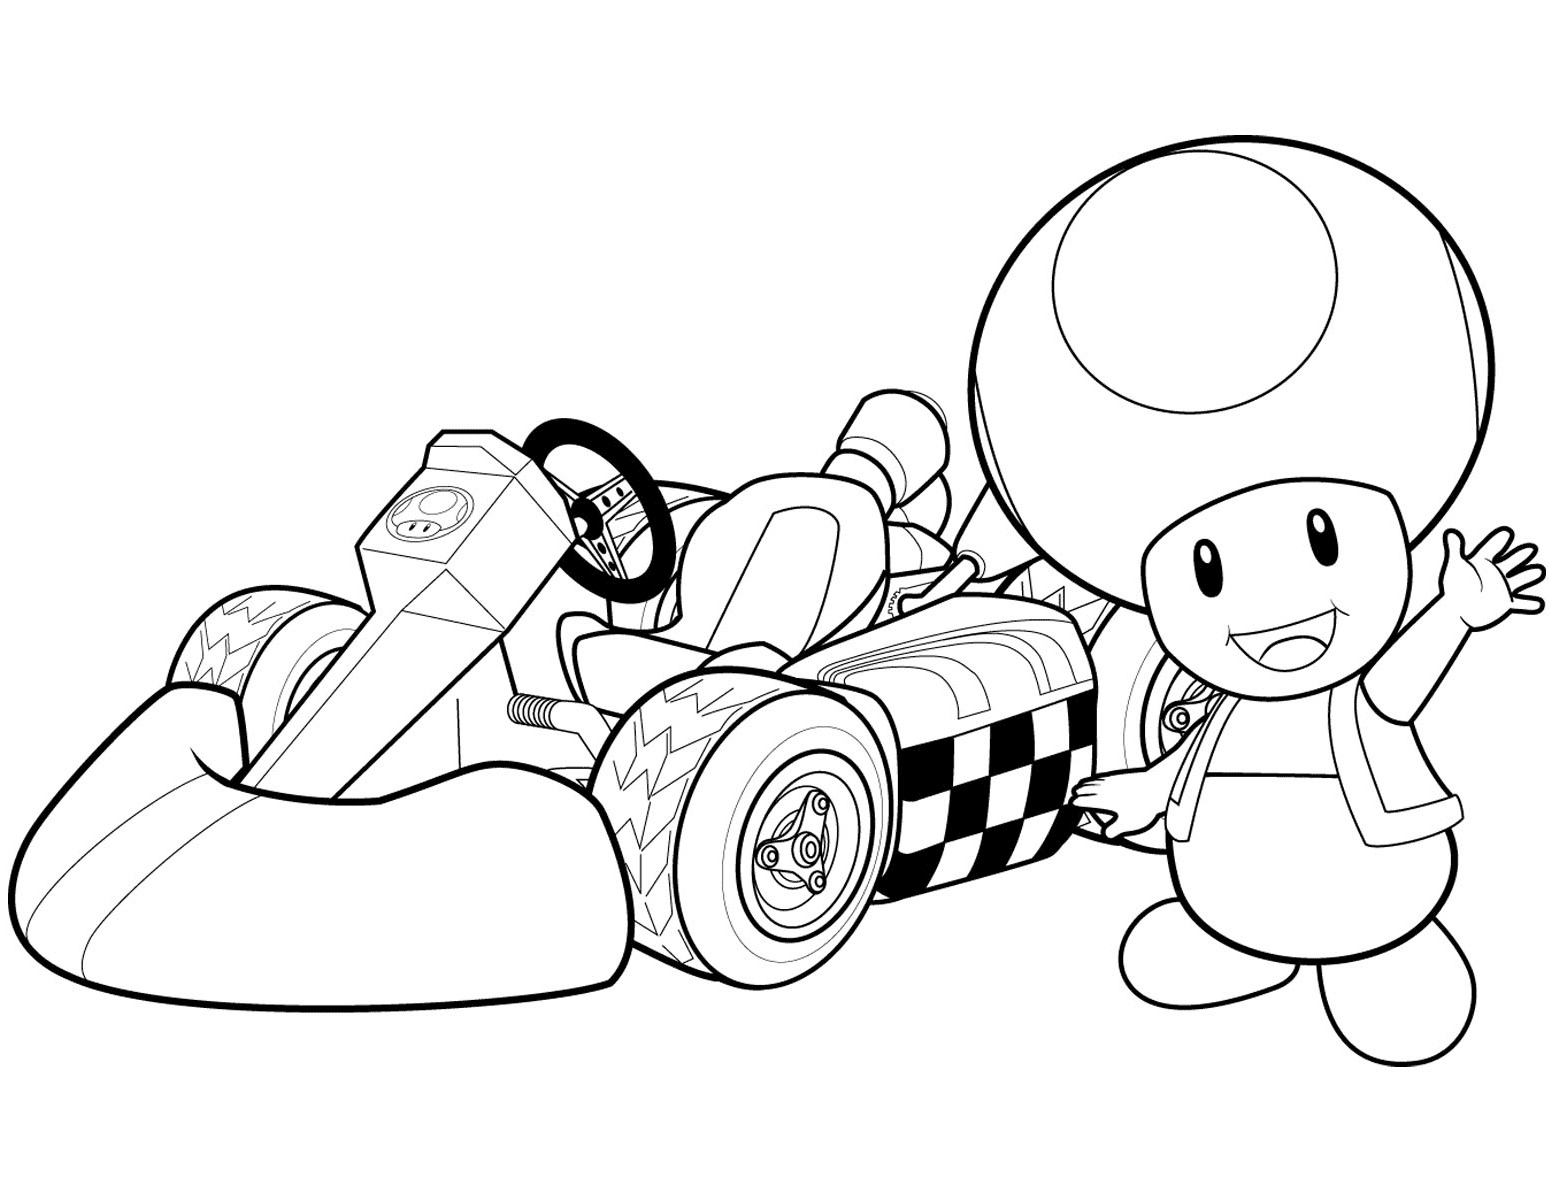 Toad in Mario Kart per console Wii da Toad Mario